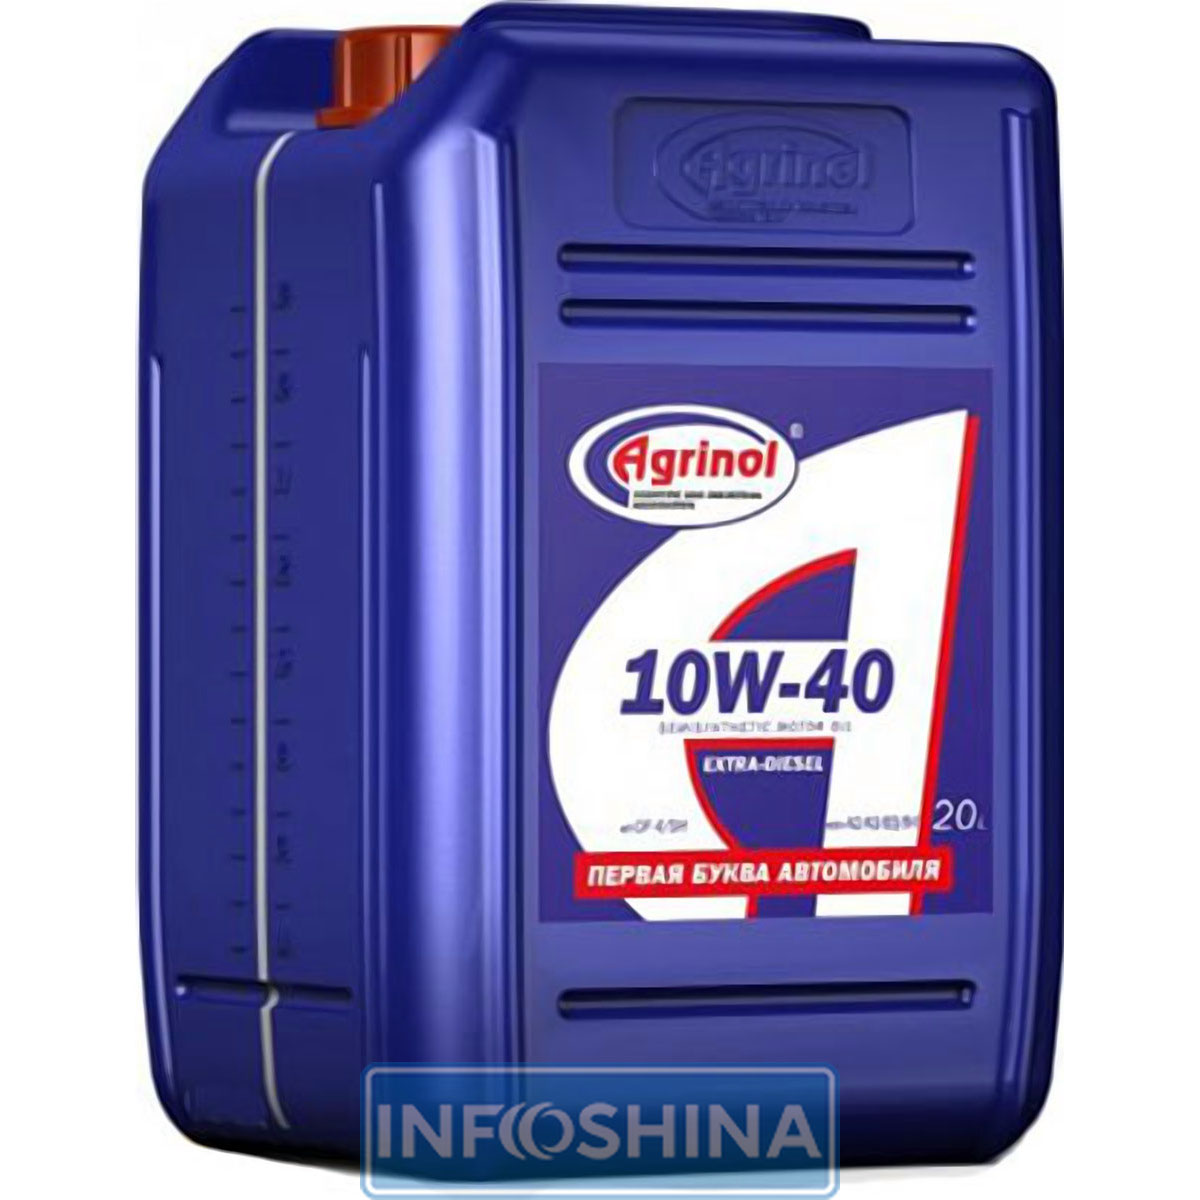 Купити масло Agrinol Extra-Diesel 10W-40 CF-4/SH (10л)